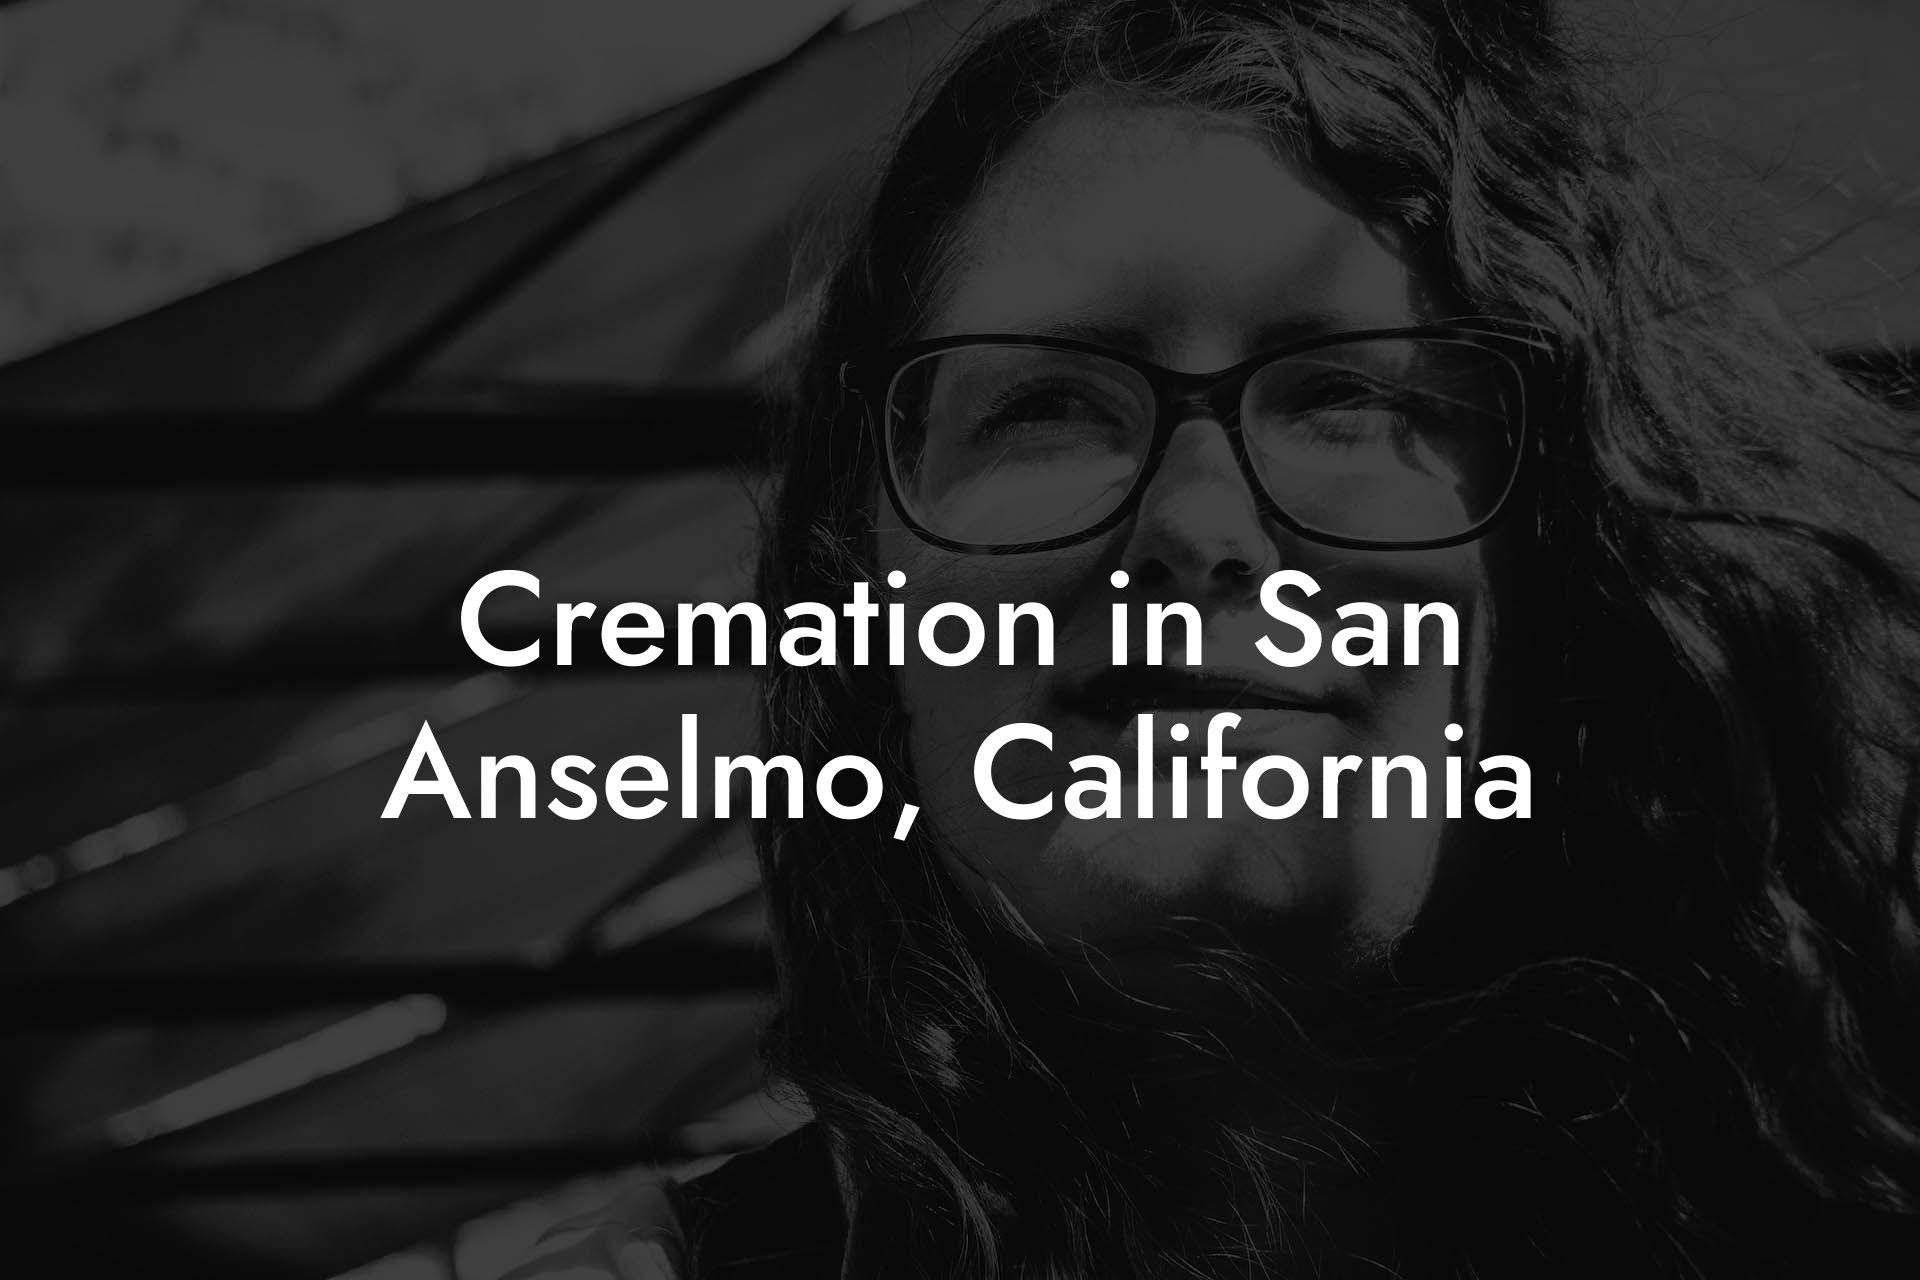 Cremation in San Anselmo, California